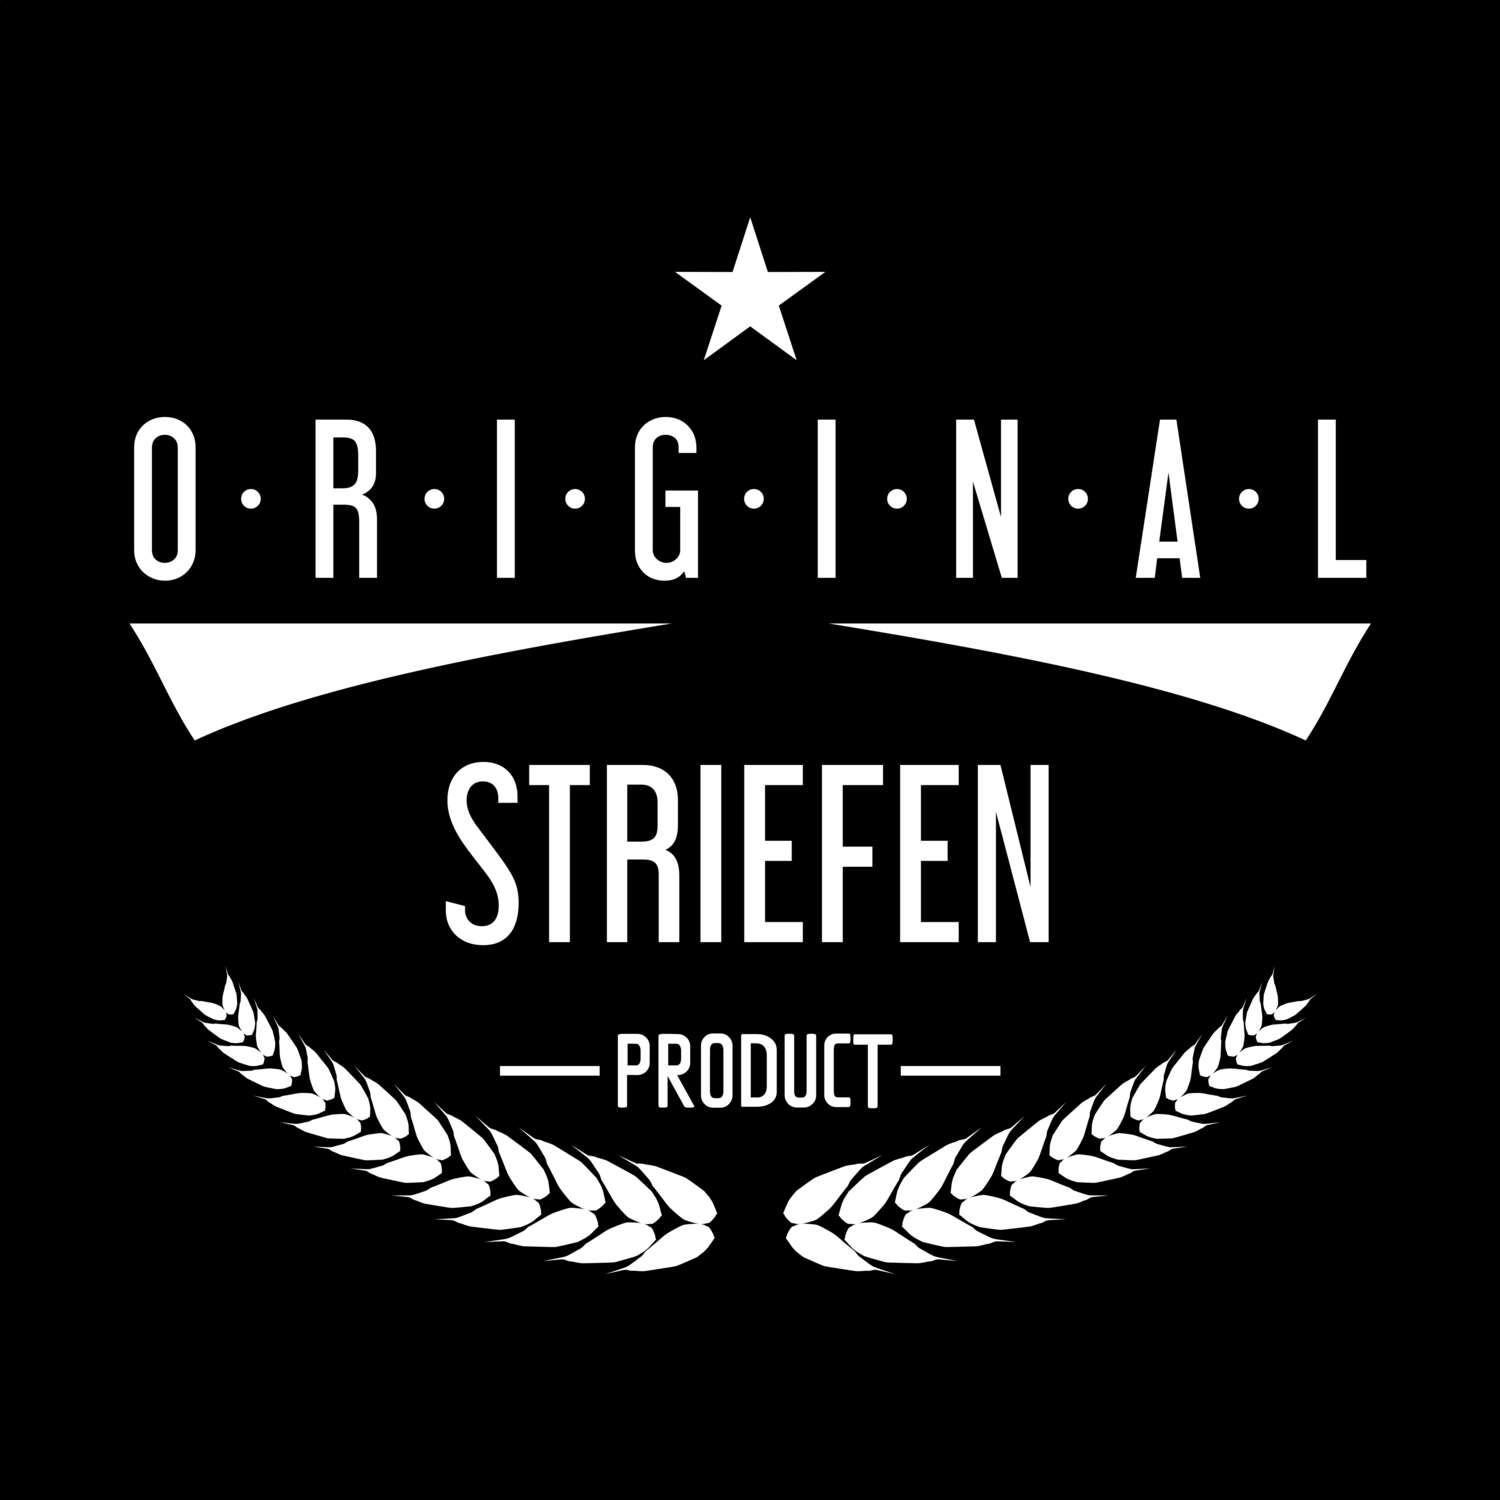 Striefen T-Shirt »Original Product«